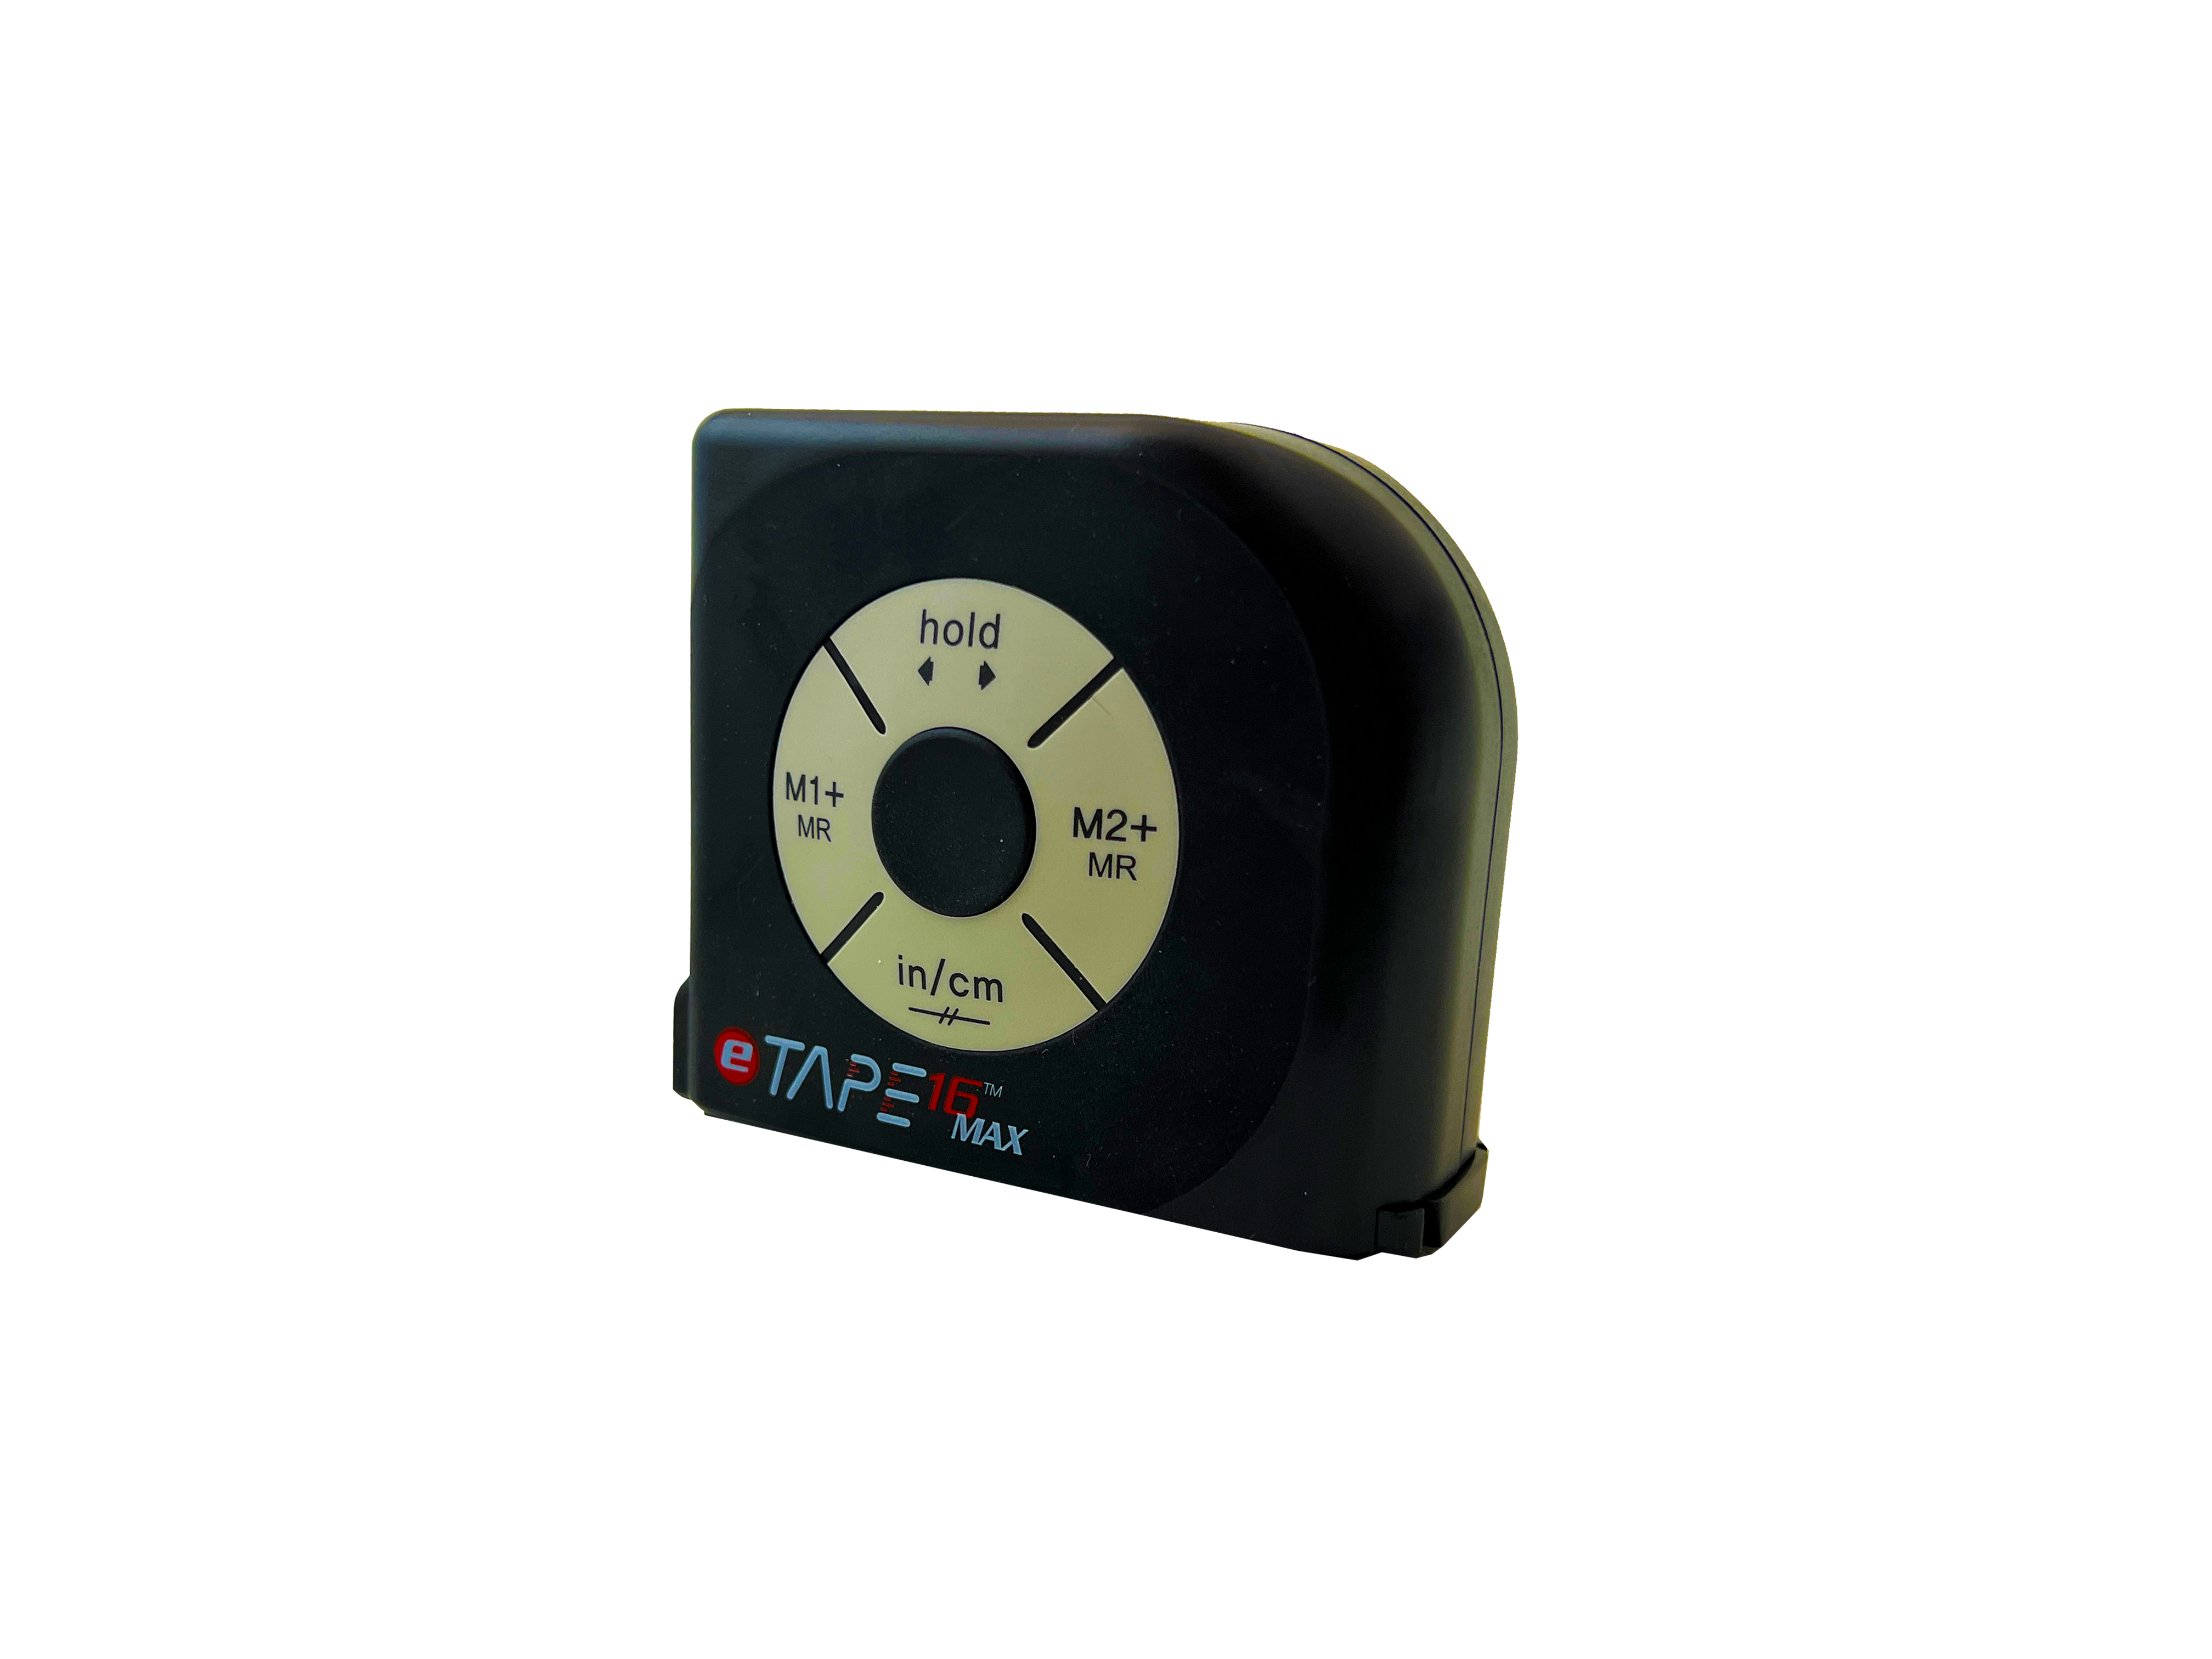 eTape16 - Digital Tape Measure 